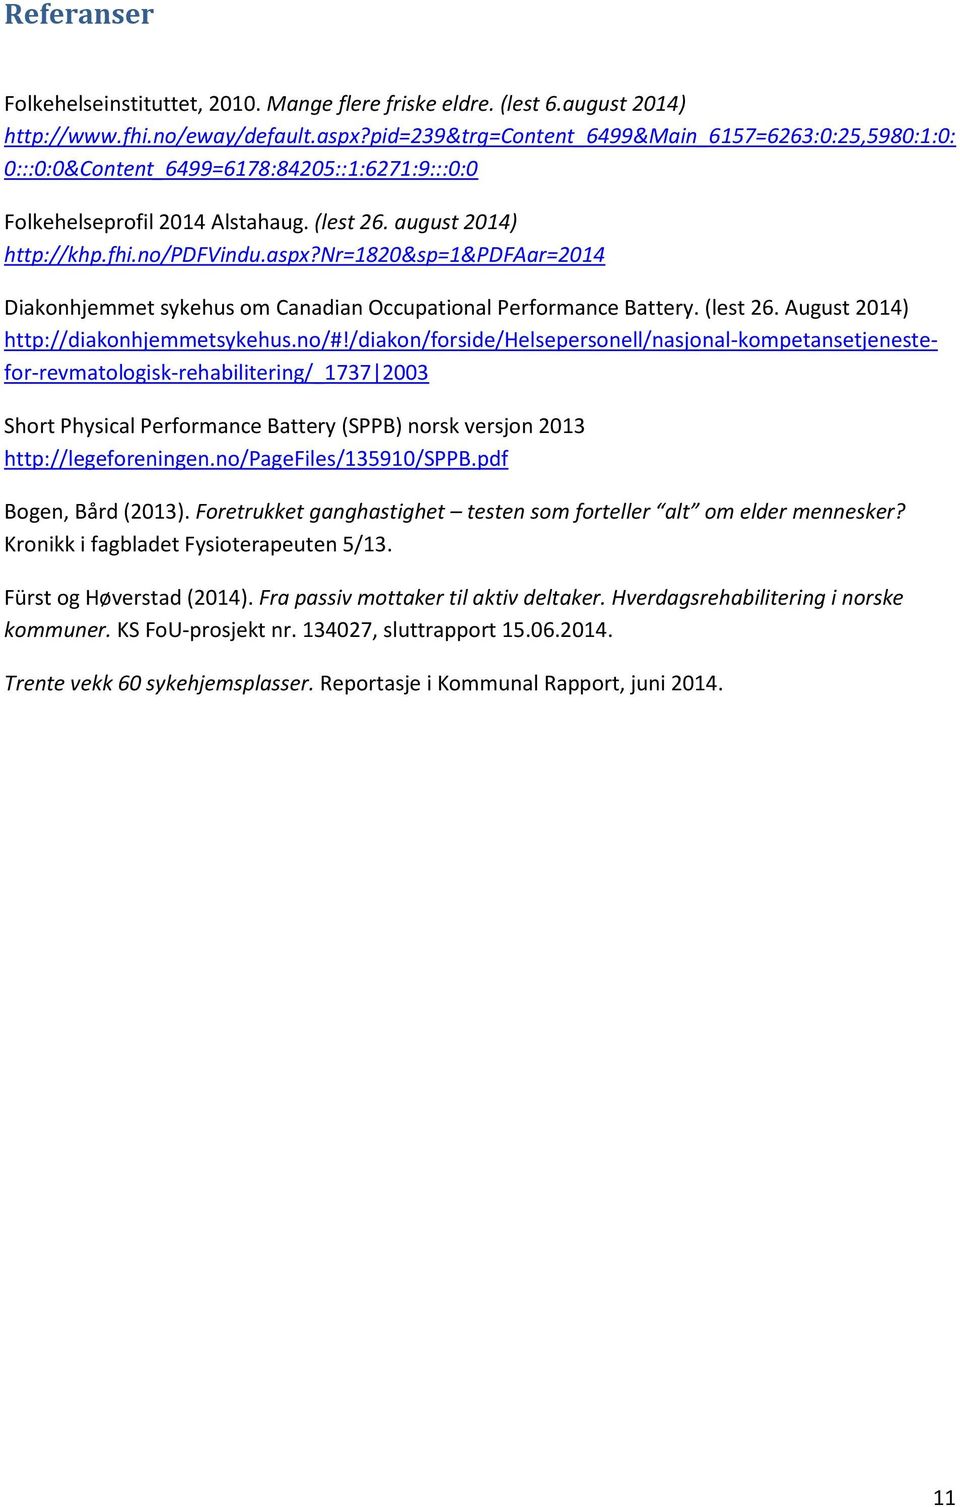 nr=1820&sp=1&pdfaar=2014 Diakonhjemmet sykehus om Canadian Occupational Performance Battery. (lest 26. August 2014) http://diakonhjemmetsykehus.no/#!